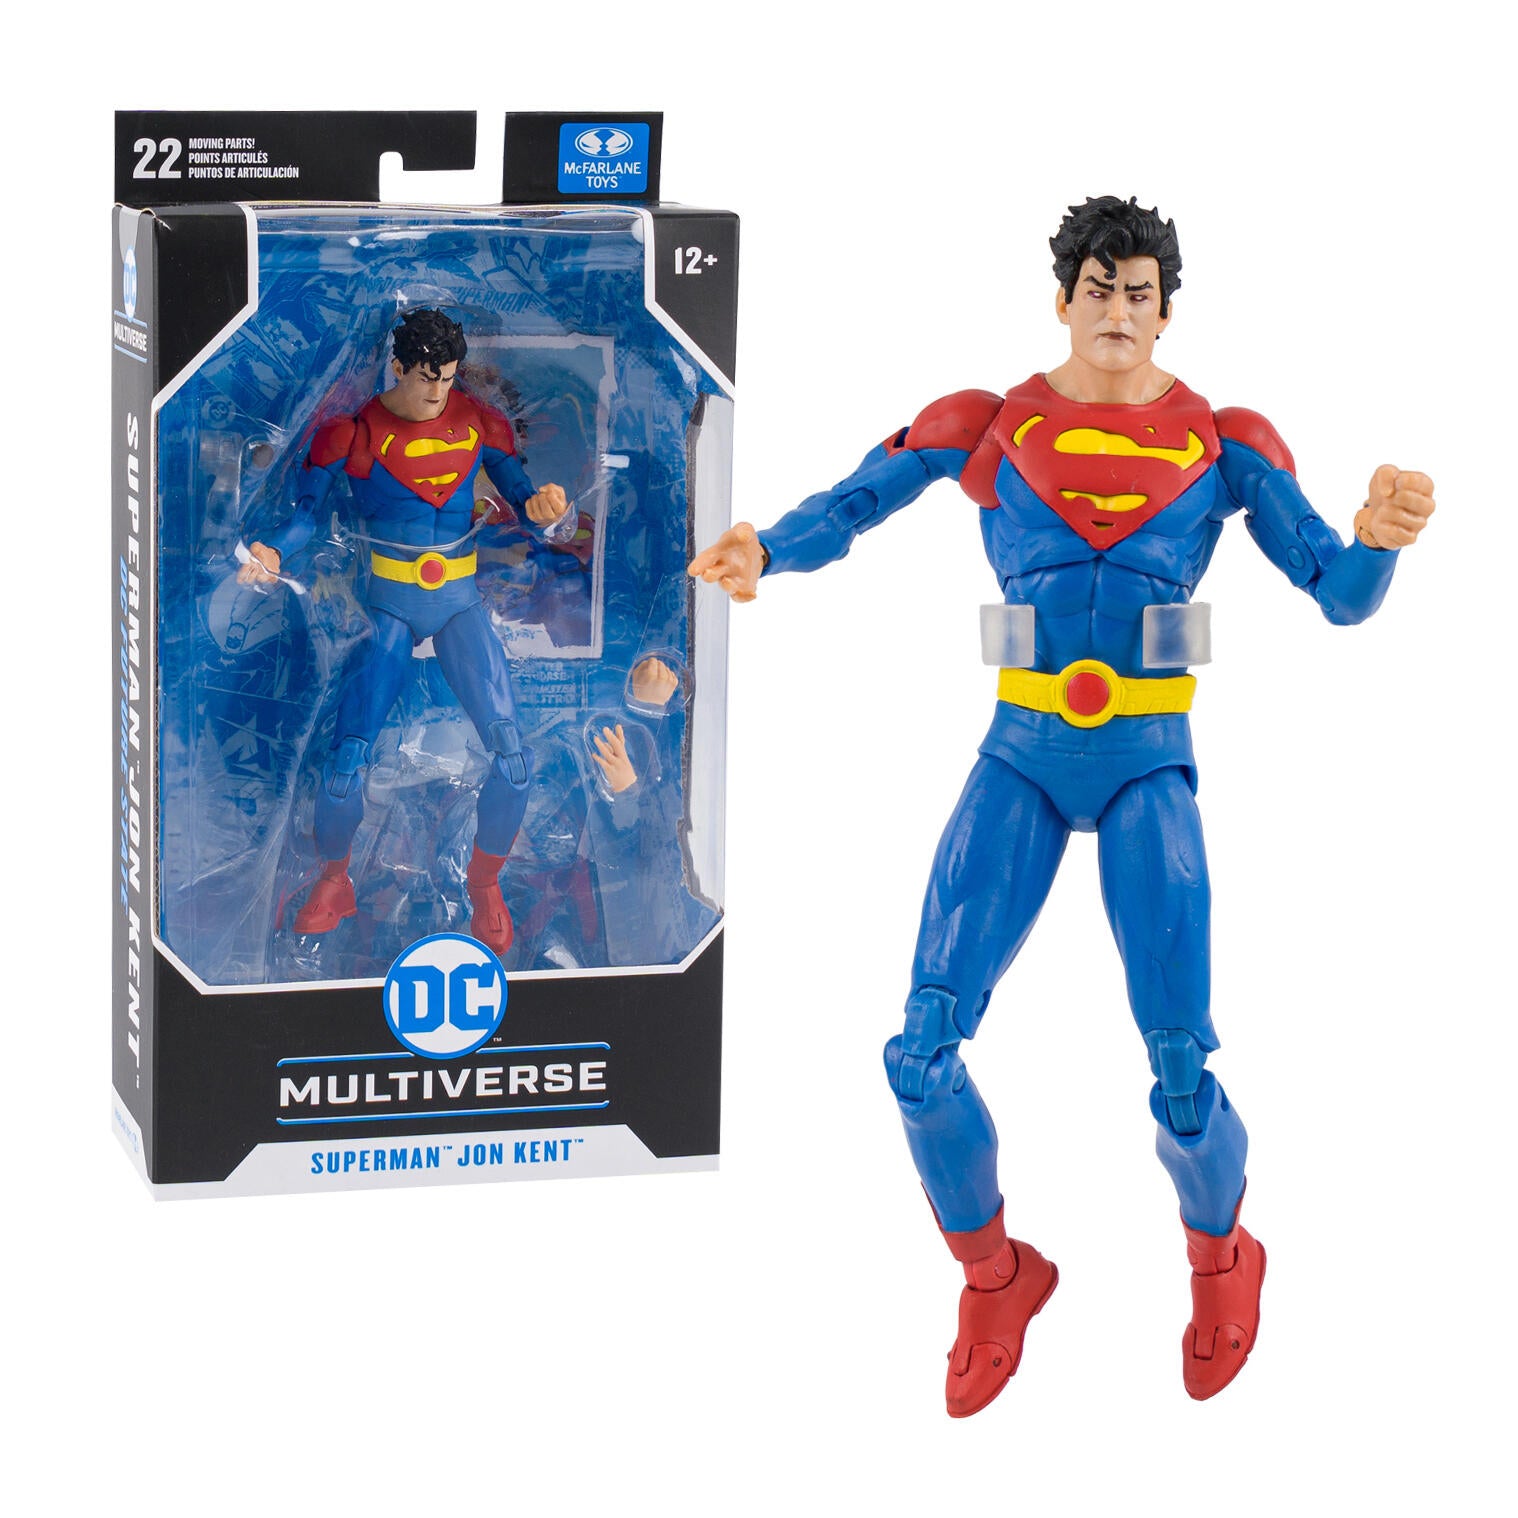 DC MULTIVERSE - SUPERMAN JON KENT ACTION FIGURE